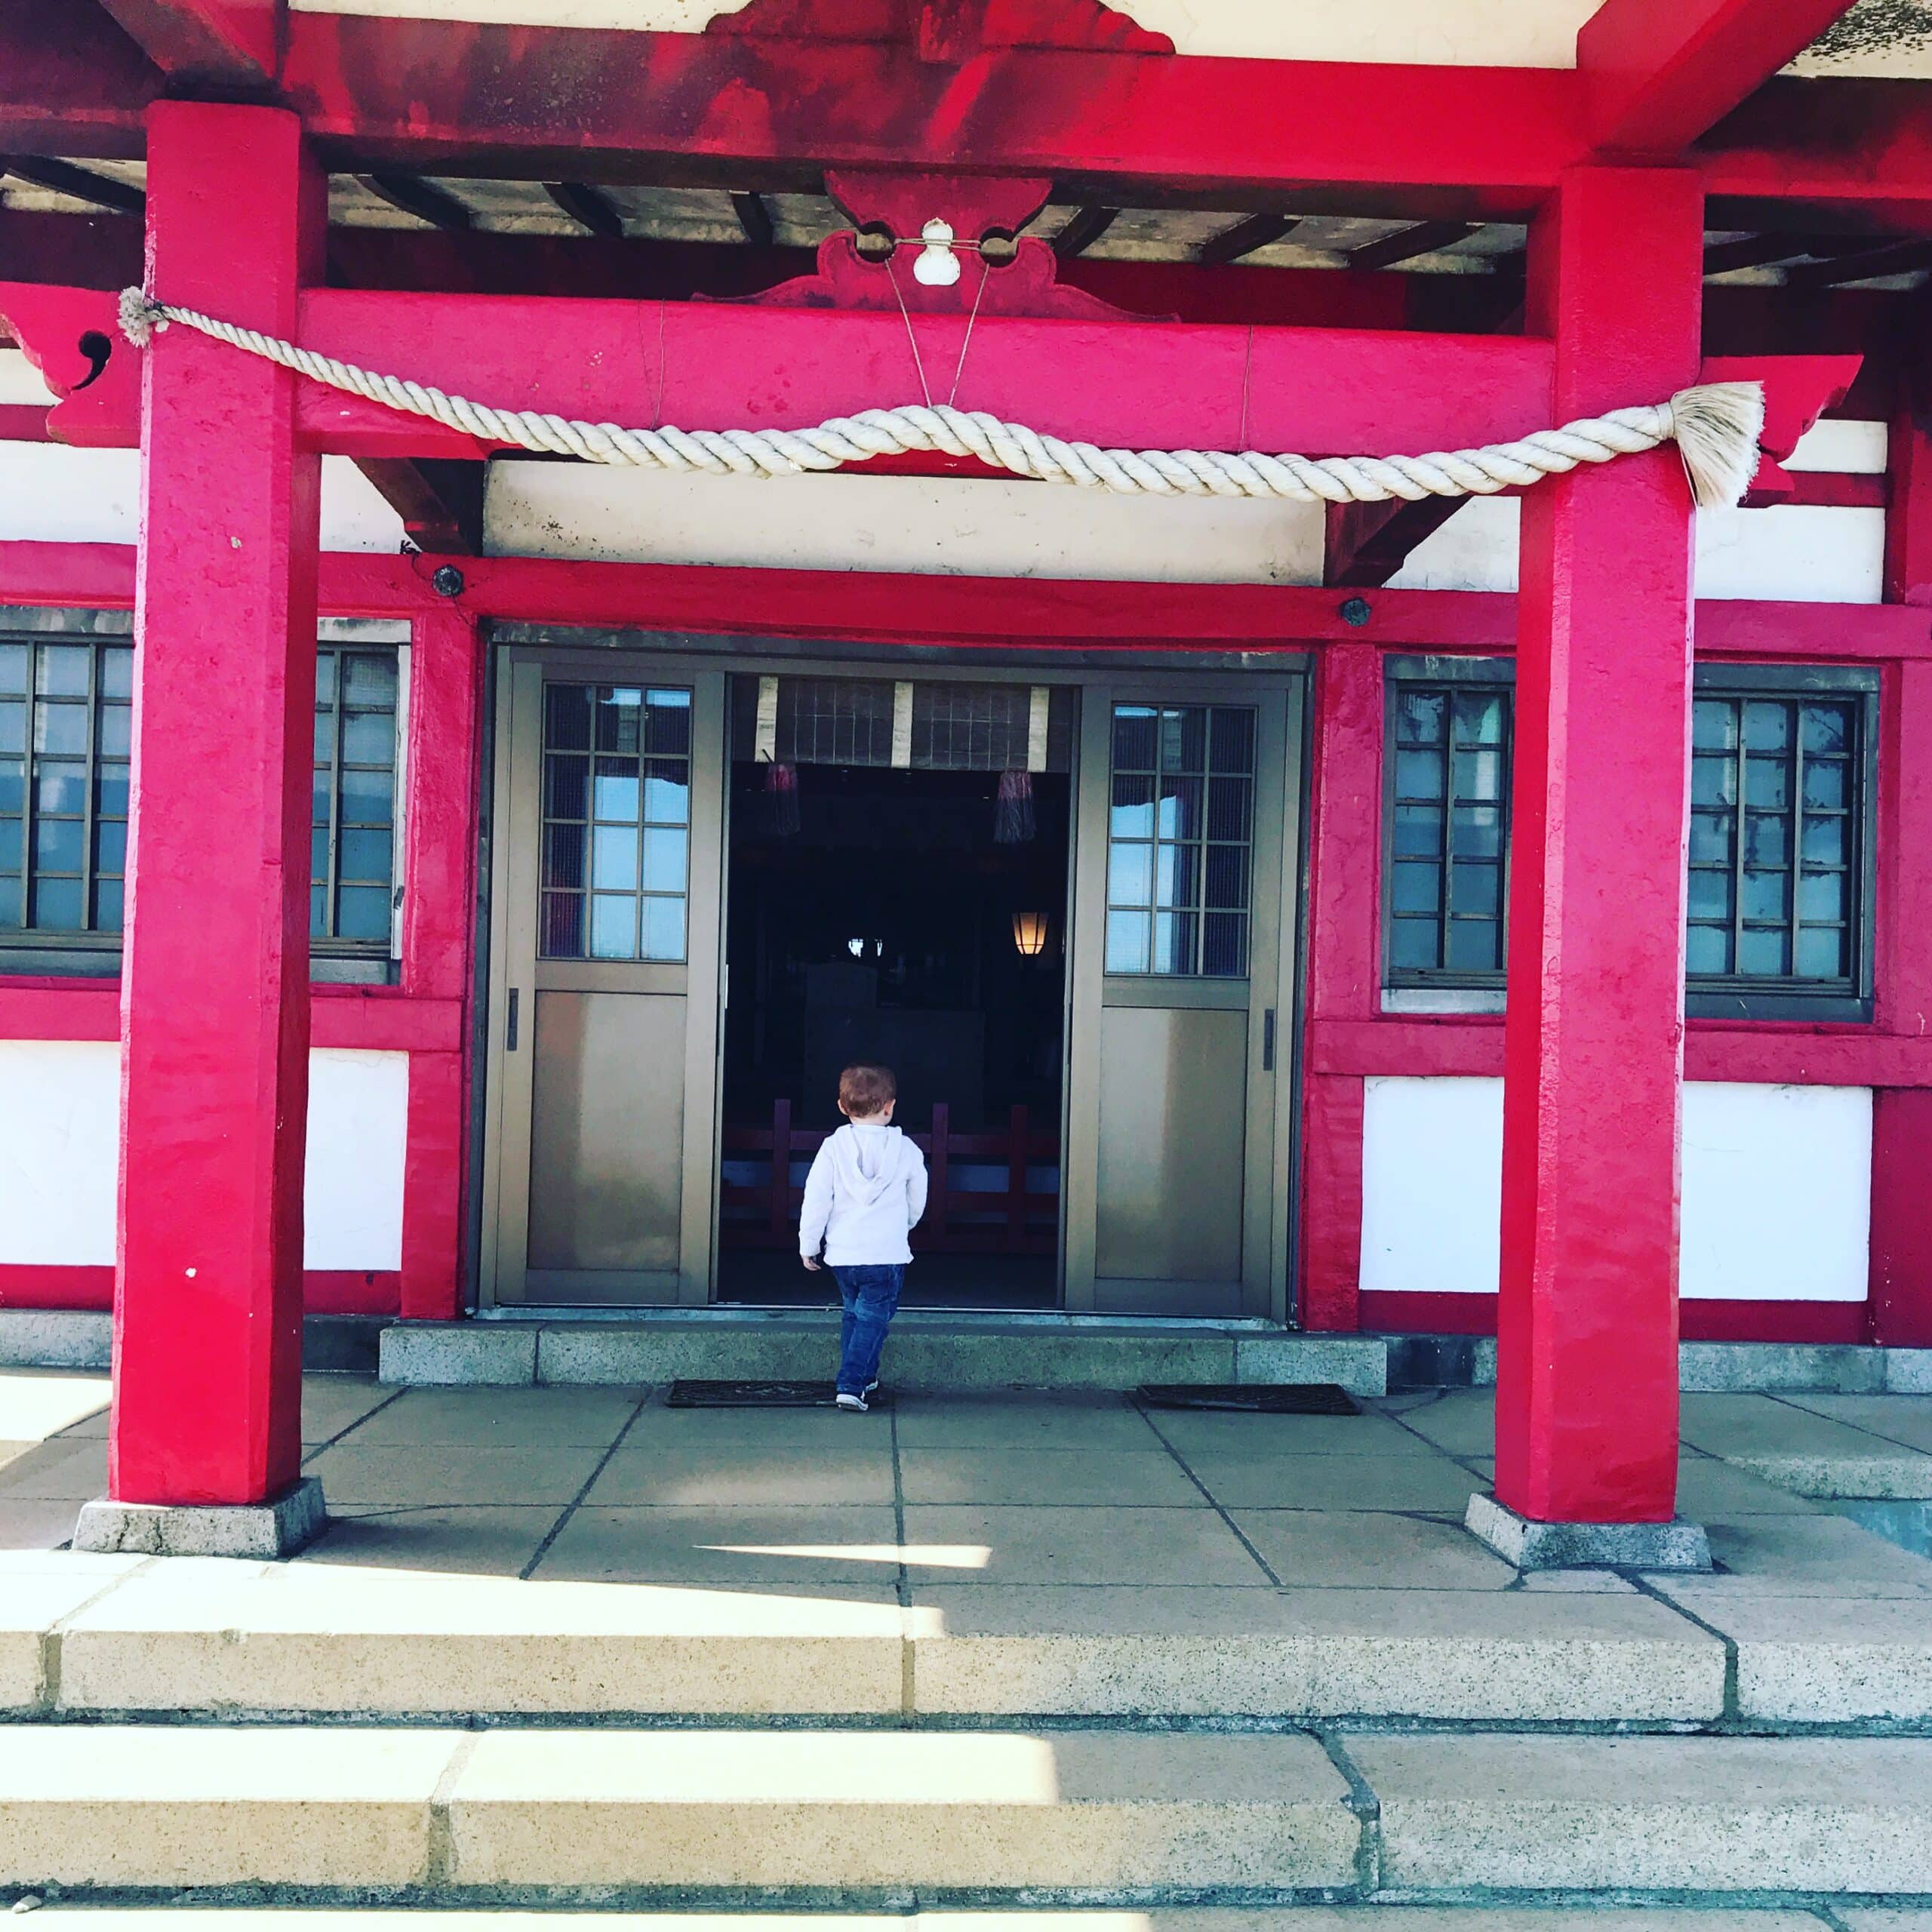 hakone shrine - Japan with Kids